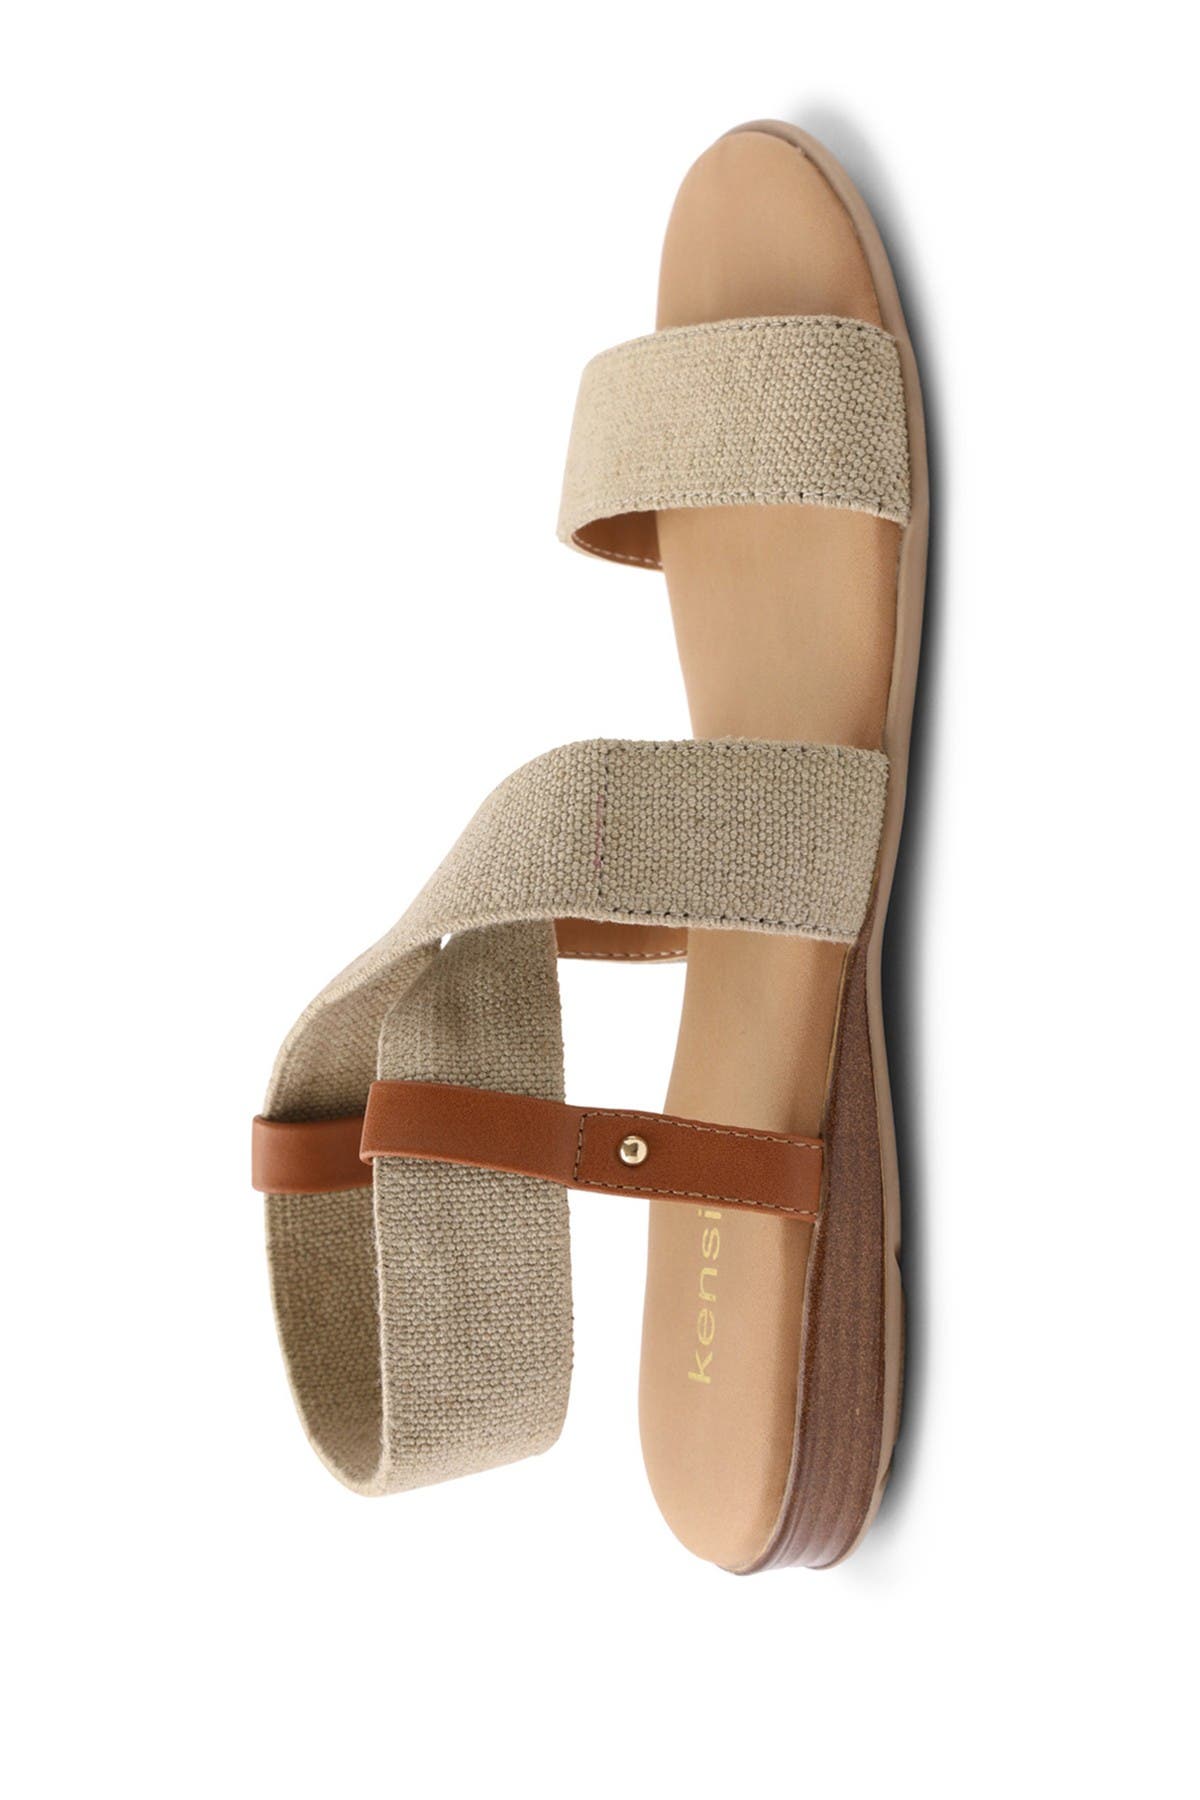 Kensie | Bora Cross Strap Sandal 